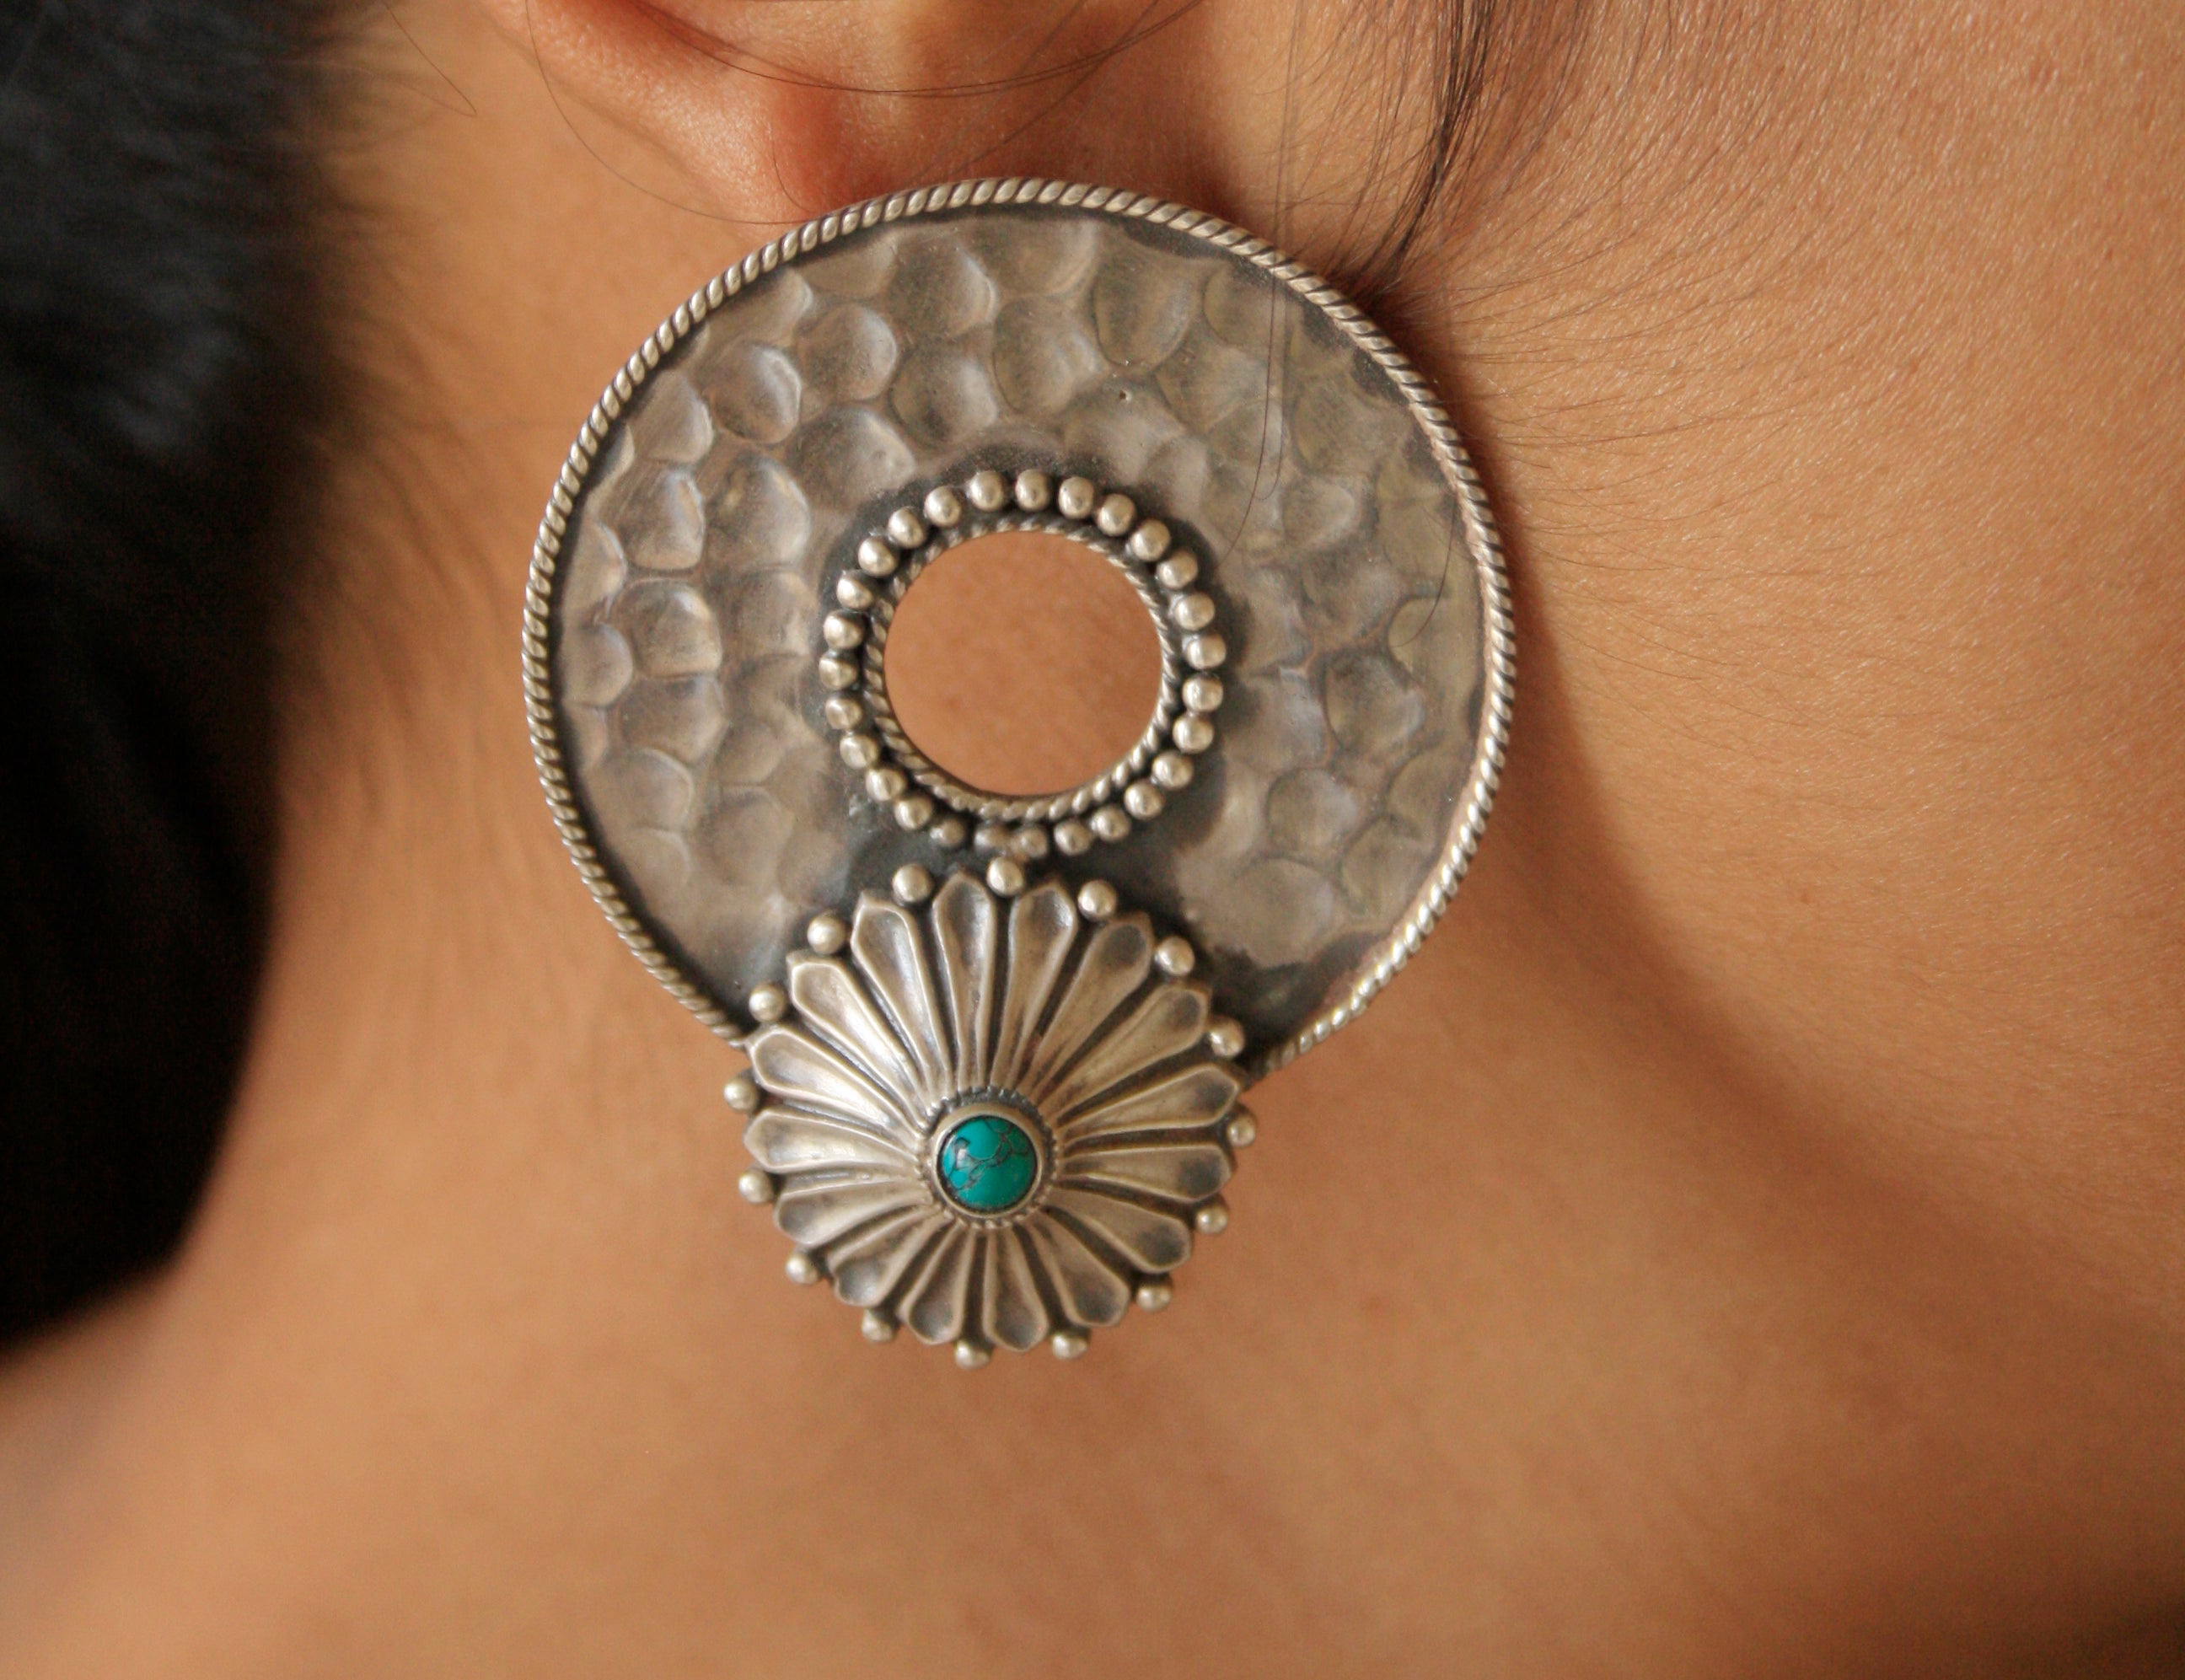 Buy Charming Silver Earrings online - Bevel Earrings - Quirksmith